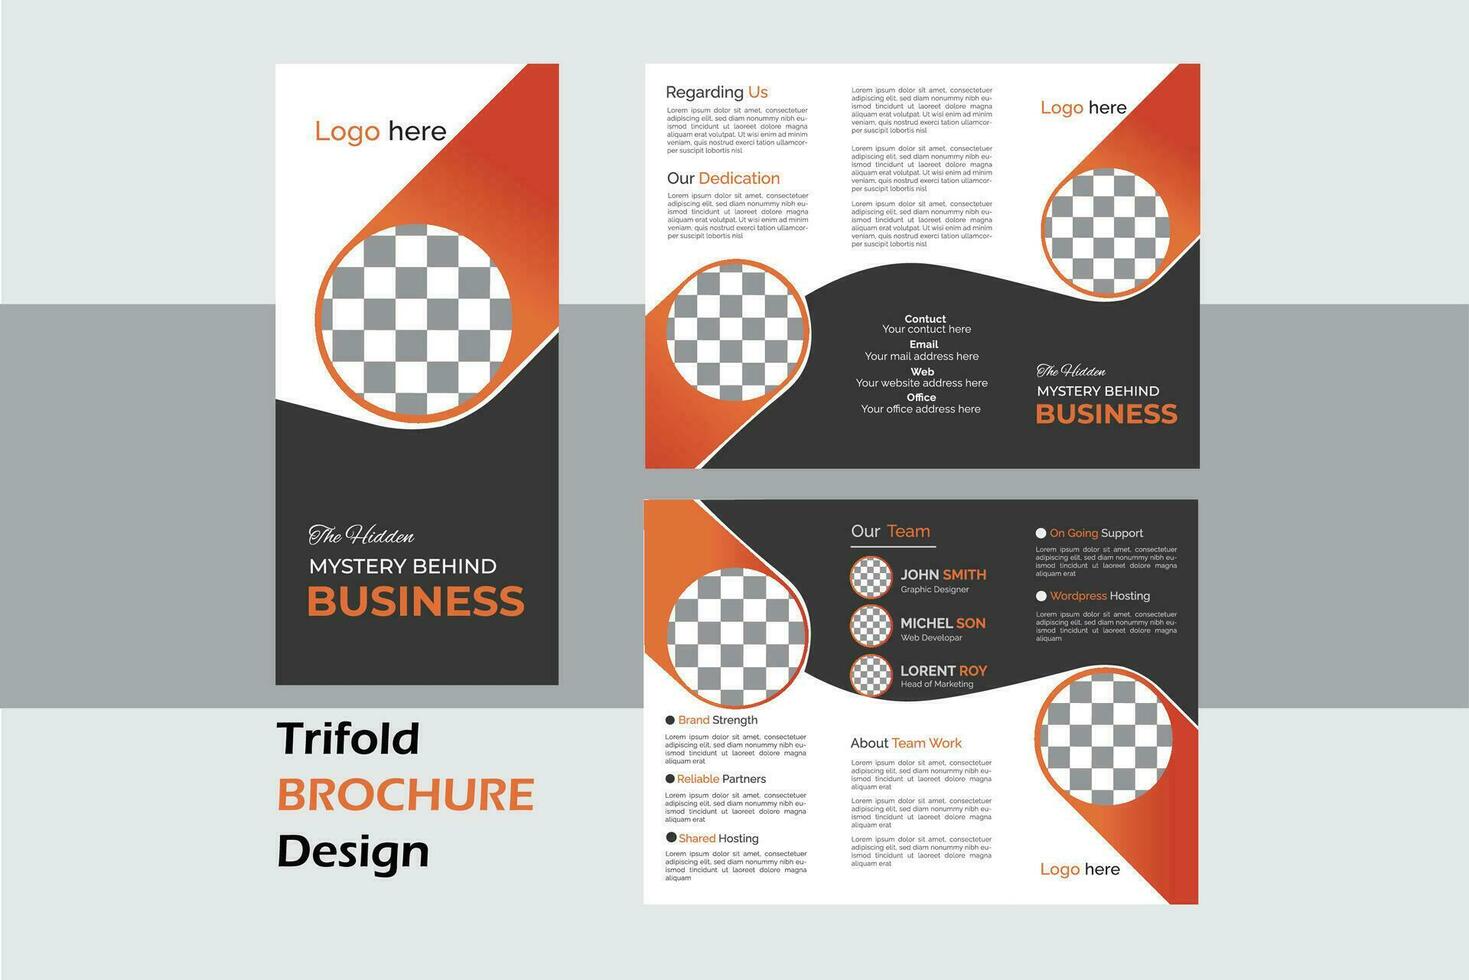 Modern Corporate Brochure Design Template. vector